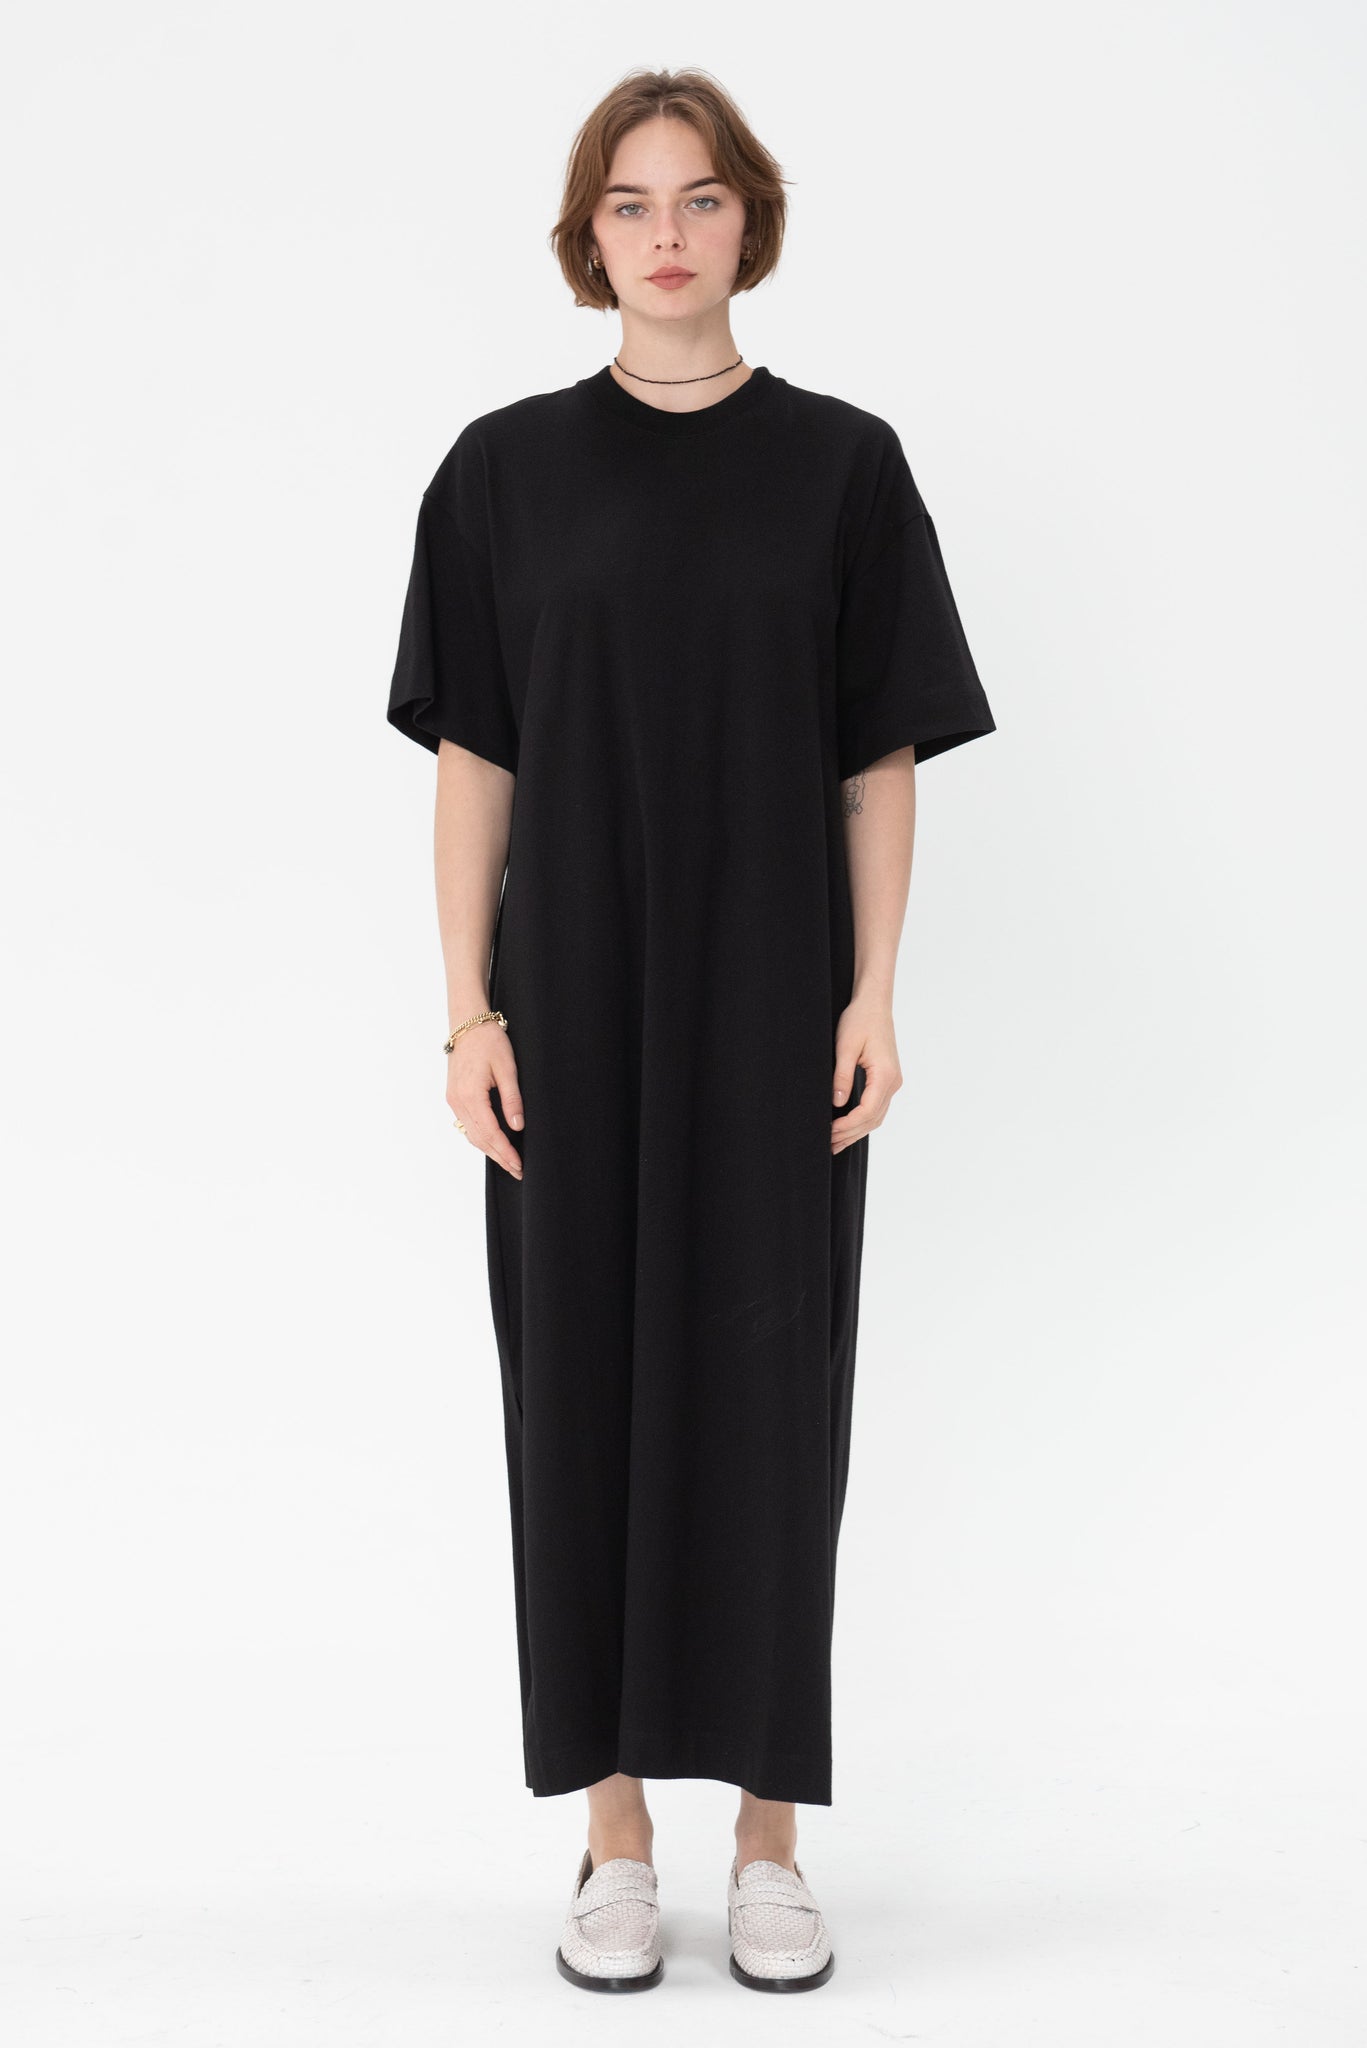 KOW TOW - Boxy T-shirt Dress, Black